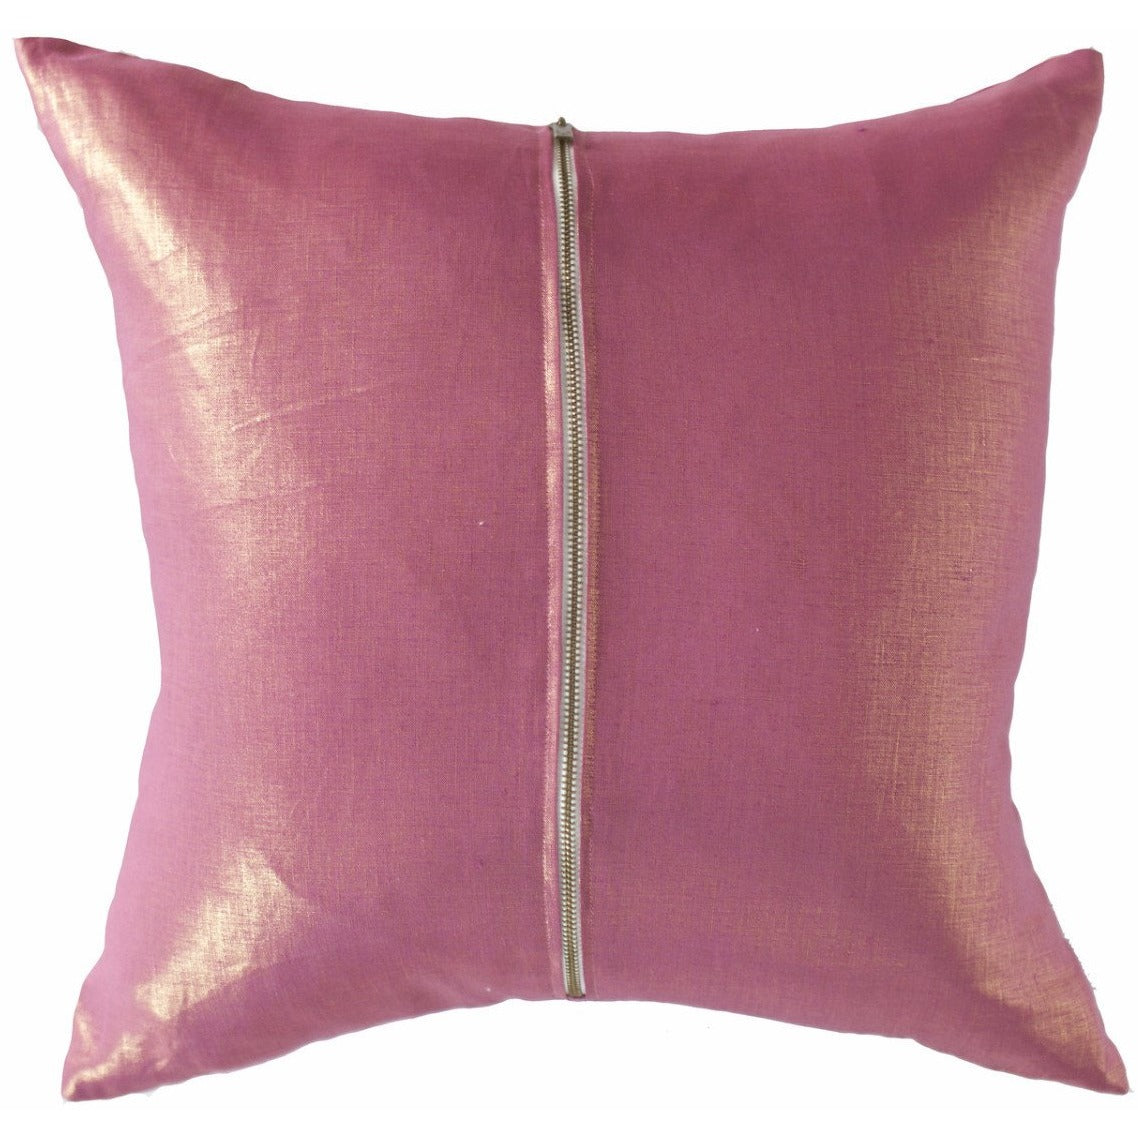 Signature Zip Front Linen Pillow - Metallic Pale Berry